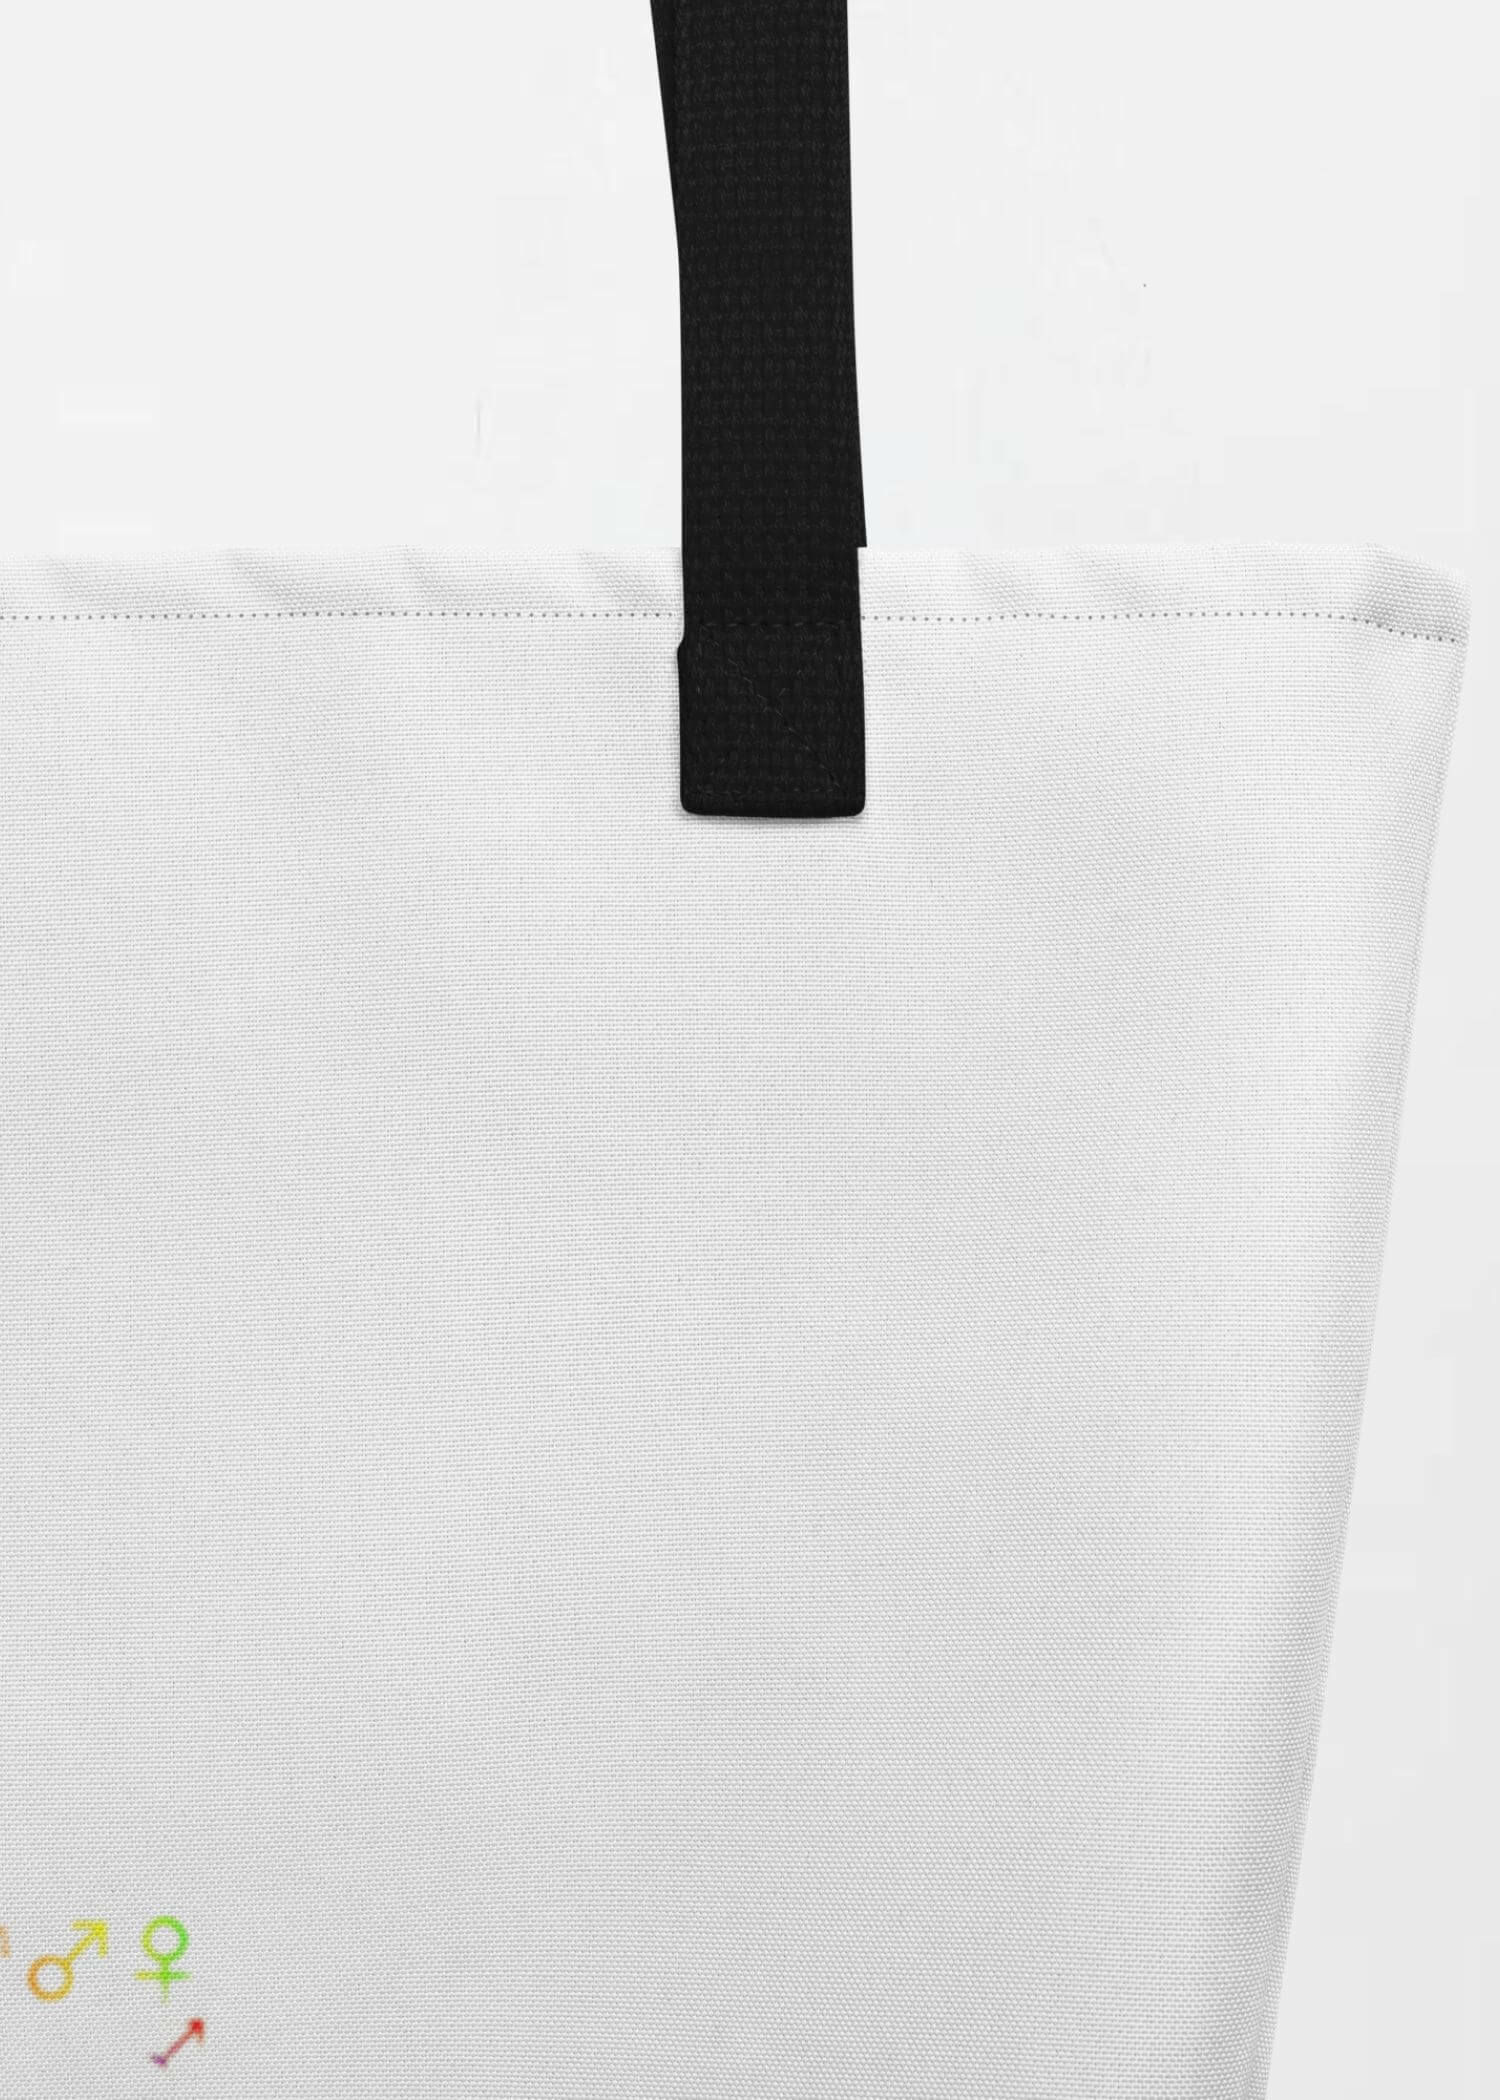 Large Unisex Tote Bag  miteigi Logo Branded product item miteigiYūki Fitness Sports Activewear by miteigi products brand items luggage baggage bags multicolor White red